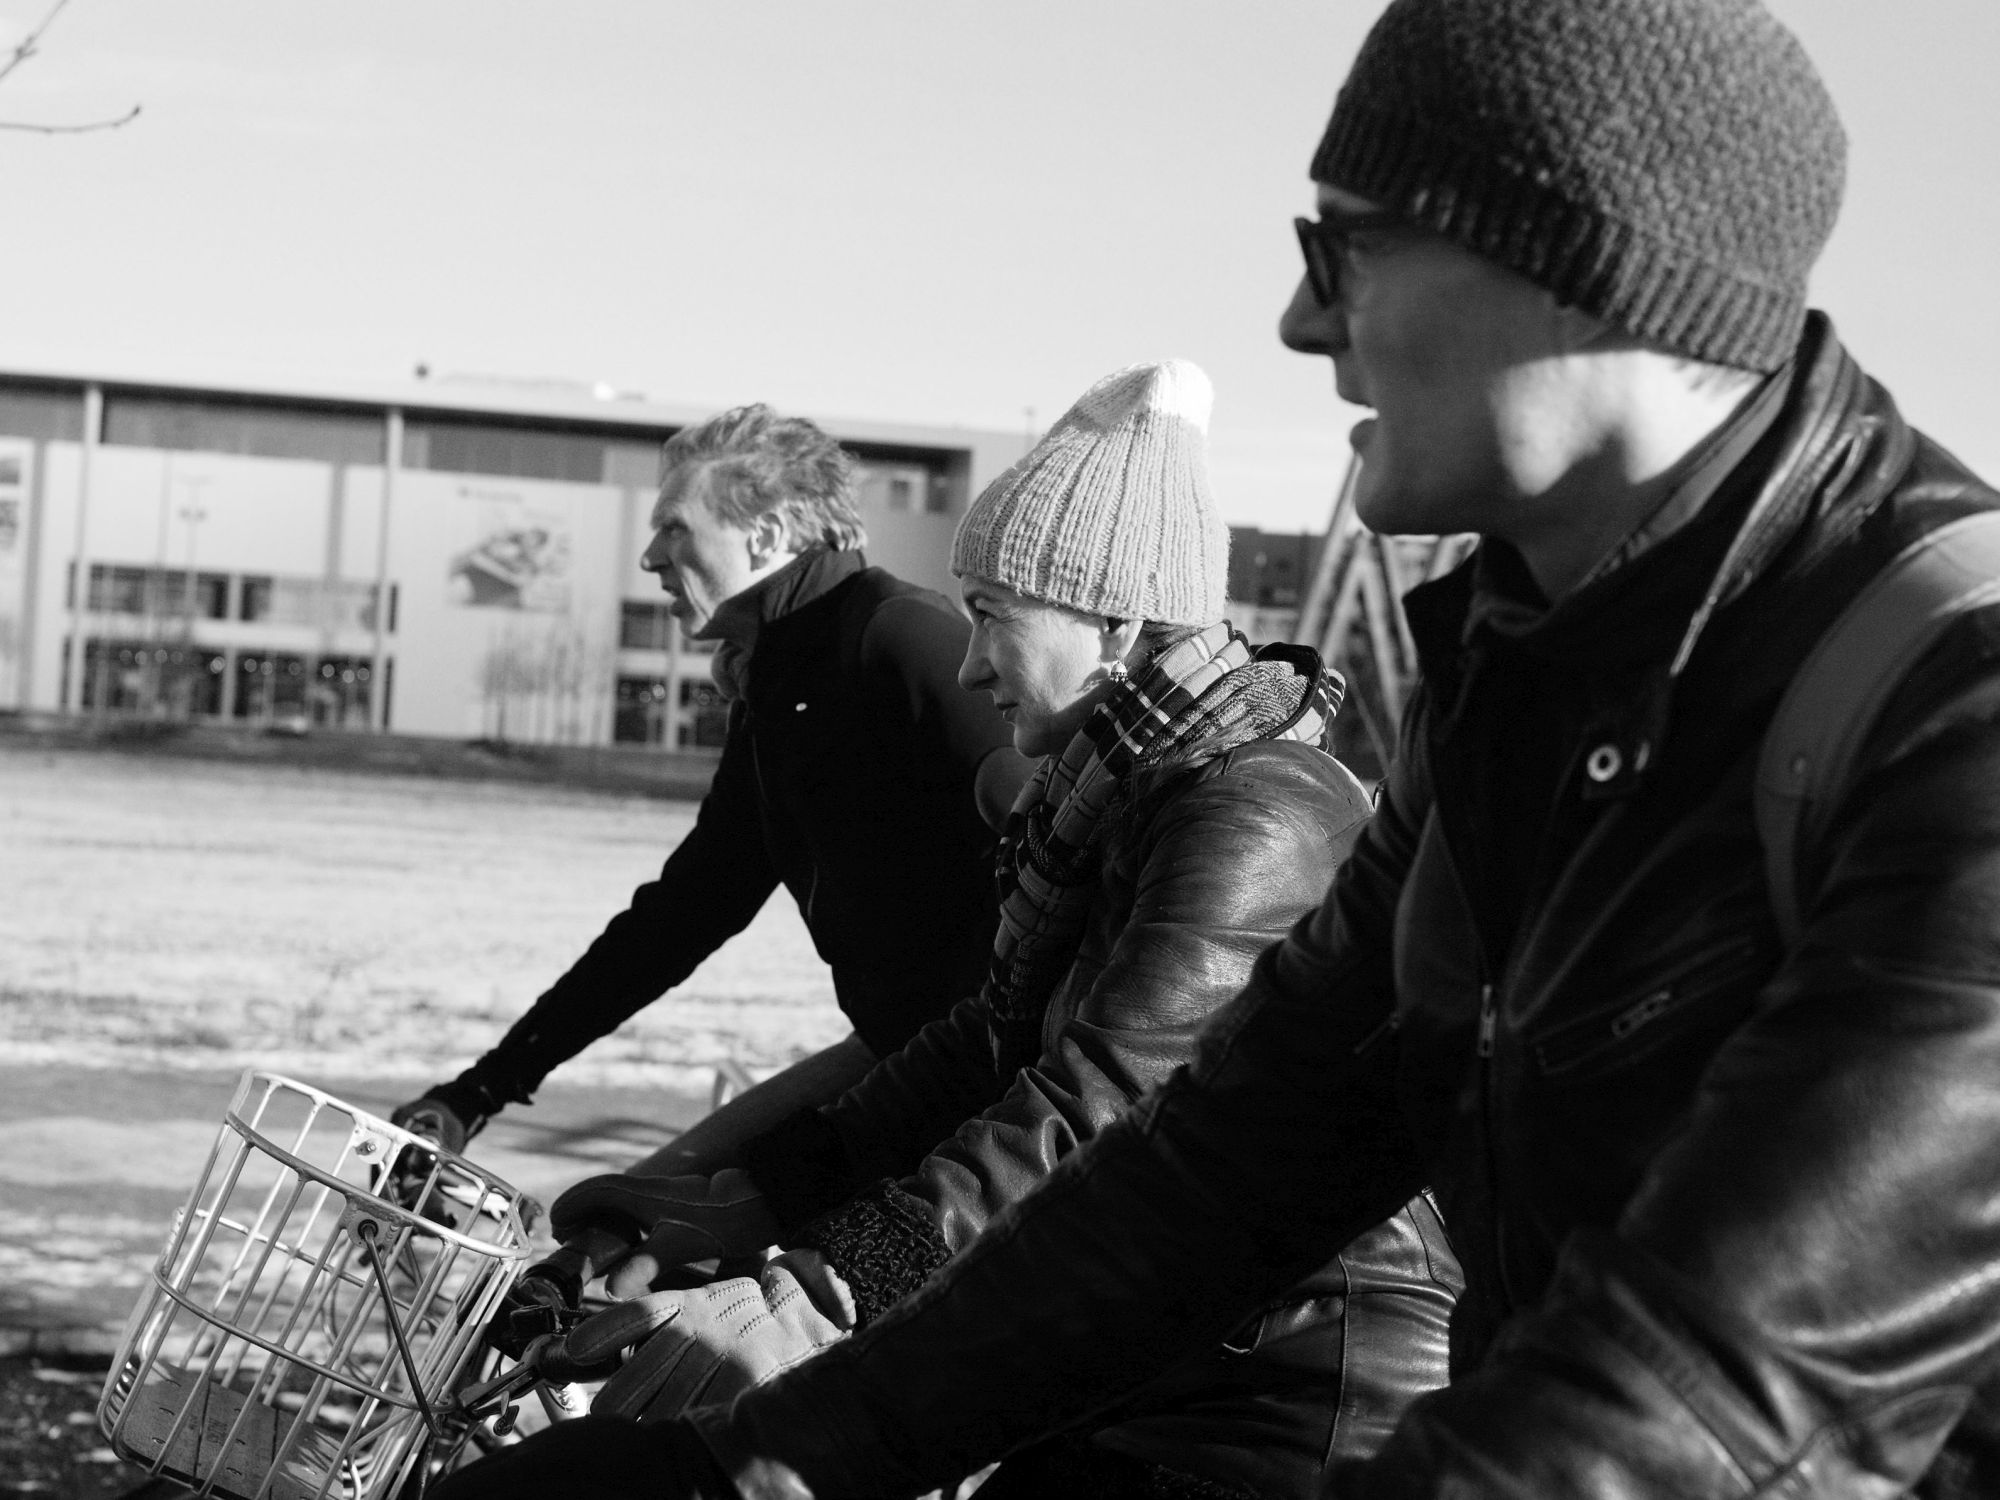 Sebastian Lentz, Rosa Loy und Sebastian Kretz nebeneinander auf Fahrrädern.